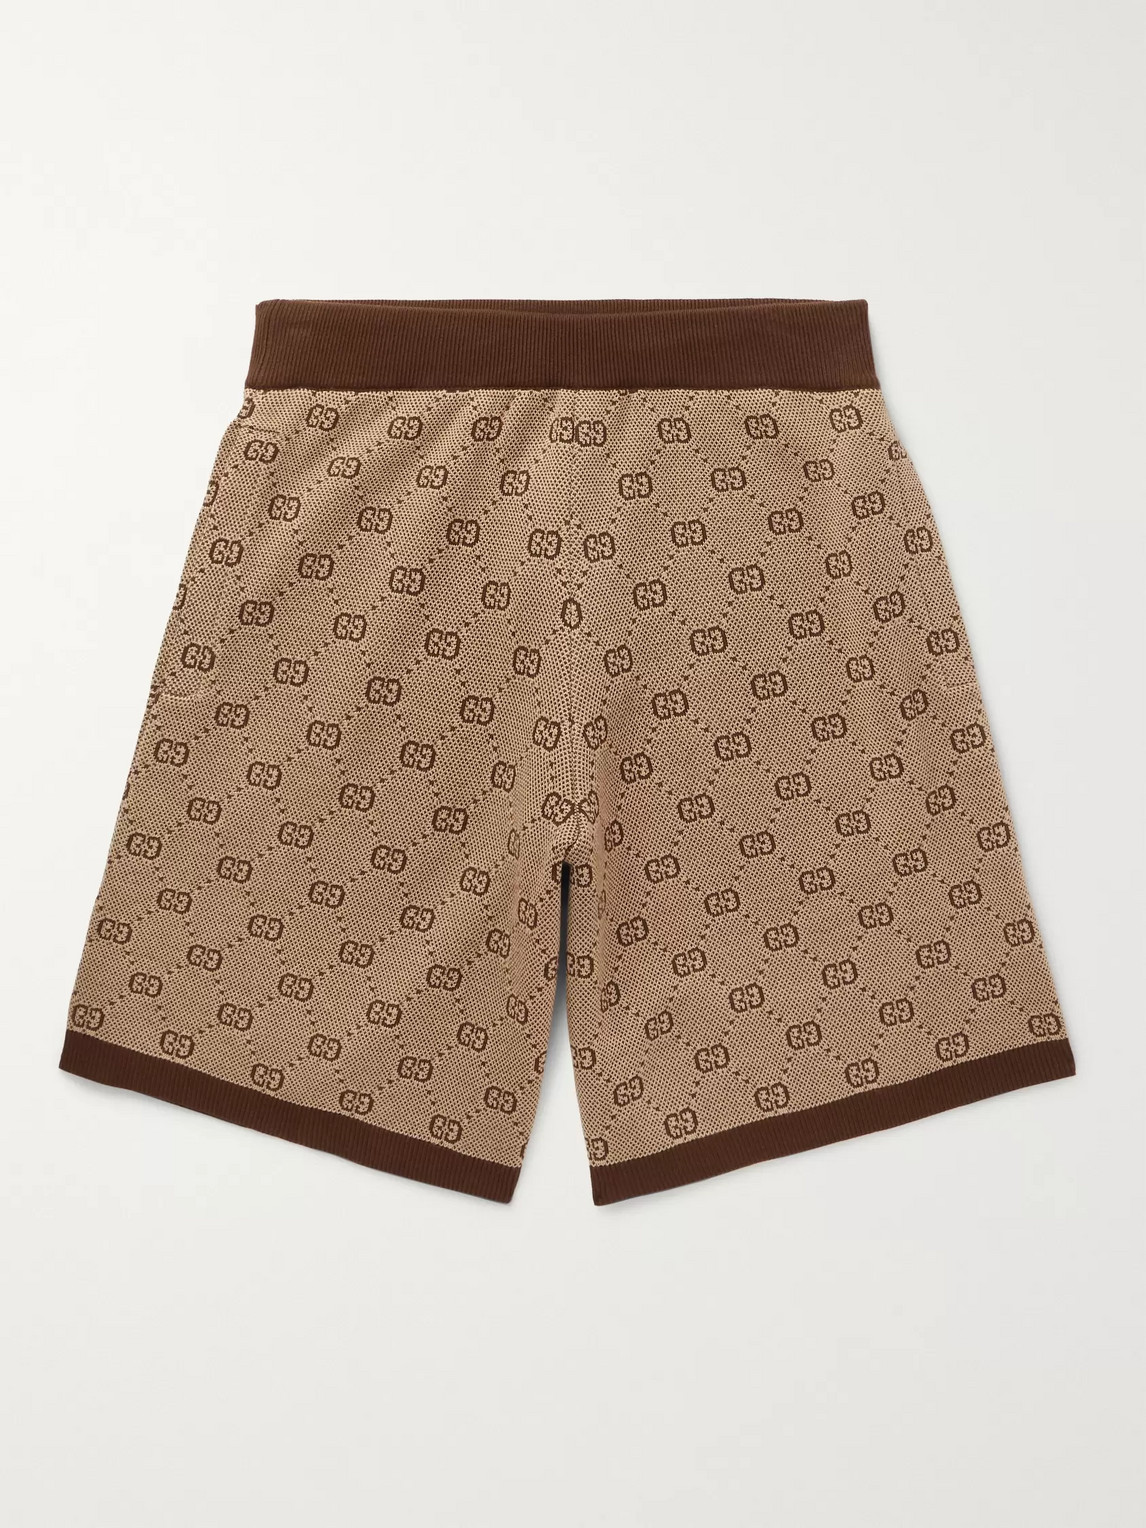 gucci shorts sale